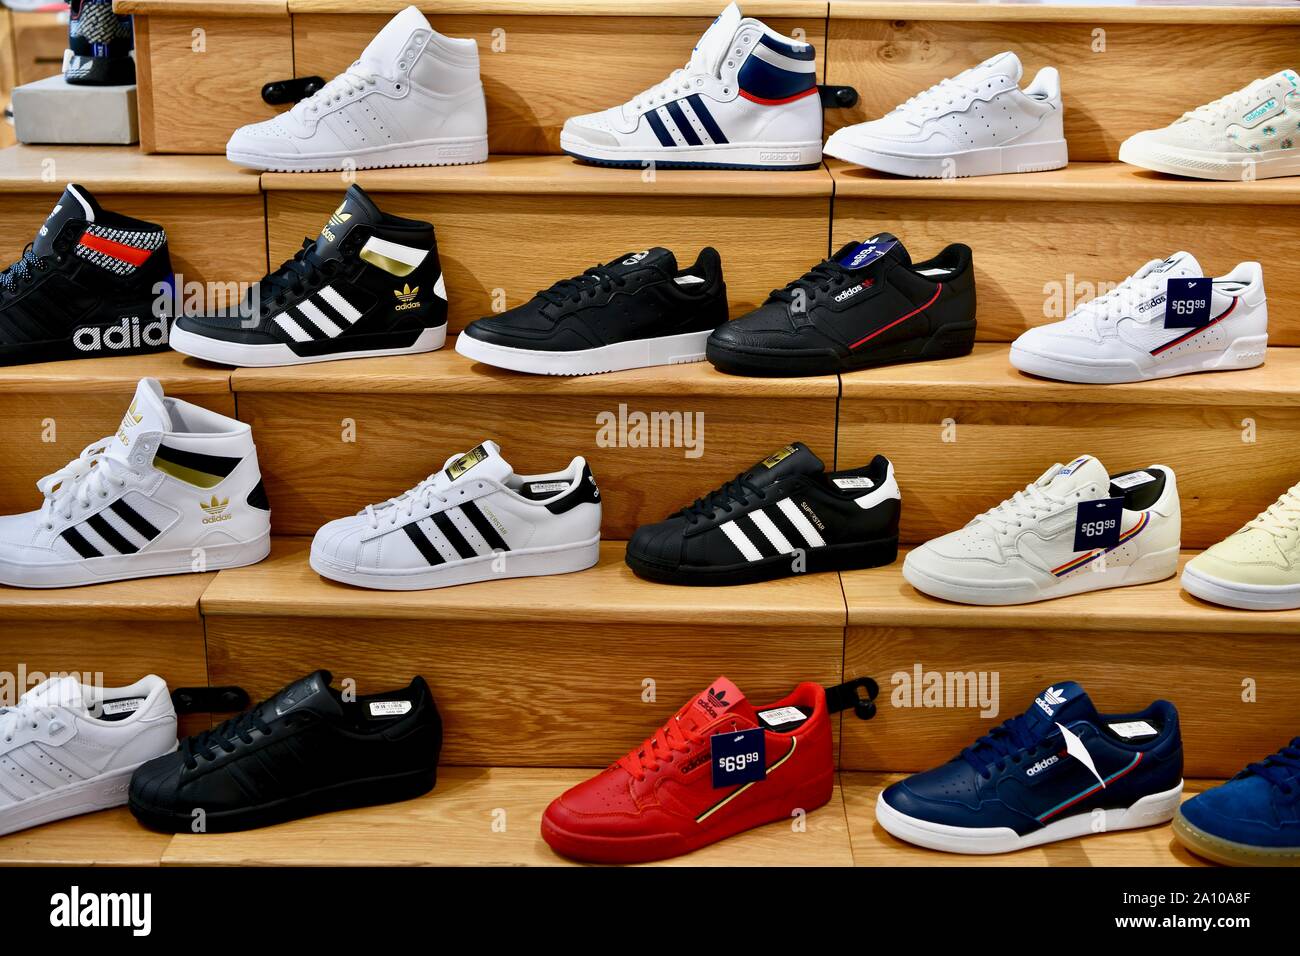 Chaussures Adidas dans le flagship store Adidas à New York City, USA Banque D'Images